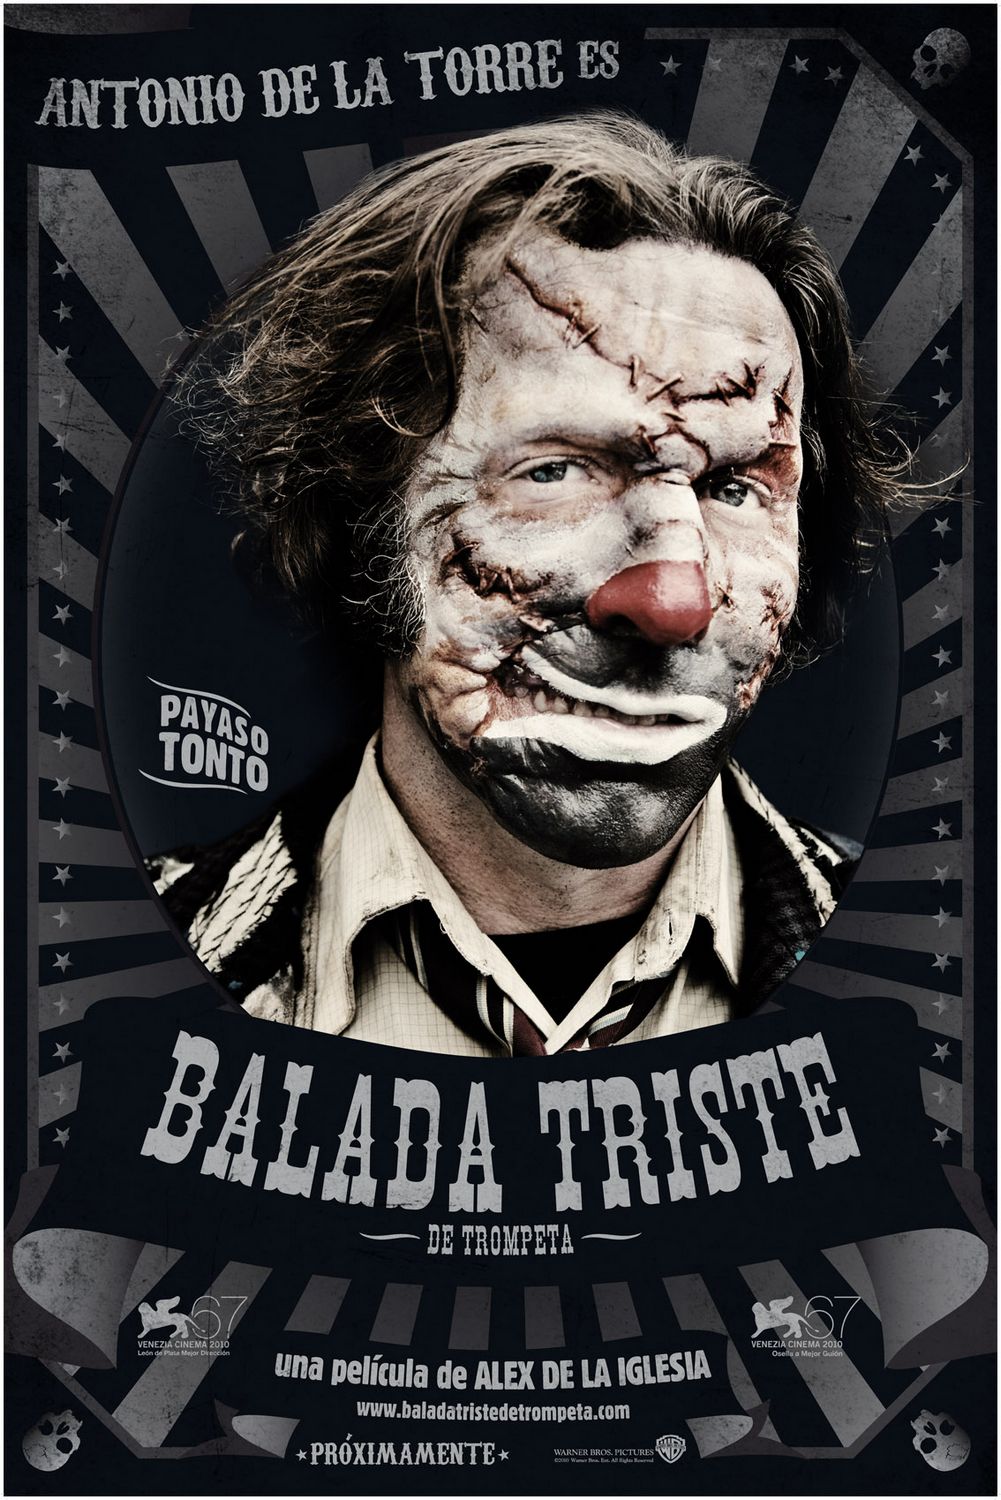 Extra Large Movie Poster Image for Balada triste de trompeta (#2 of 9)